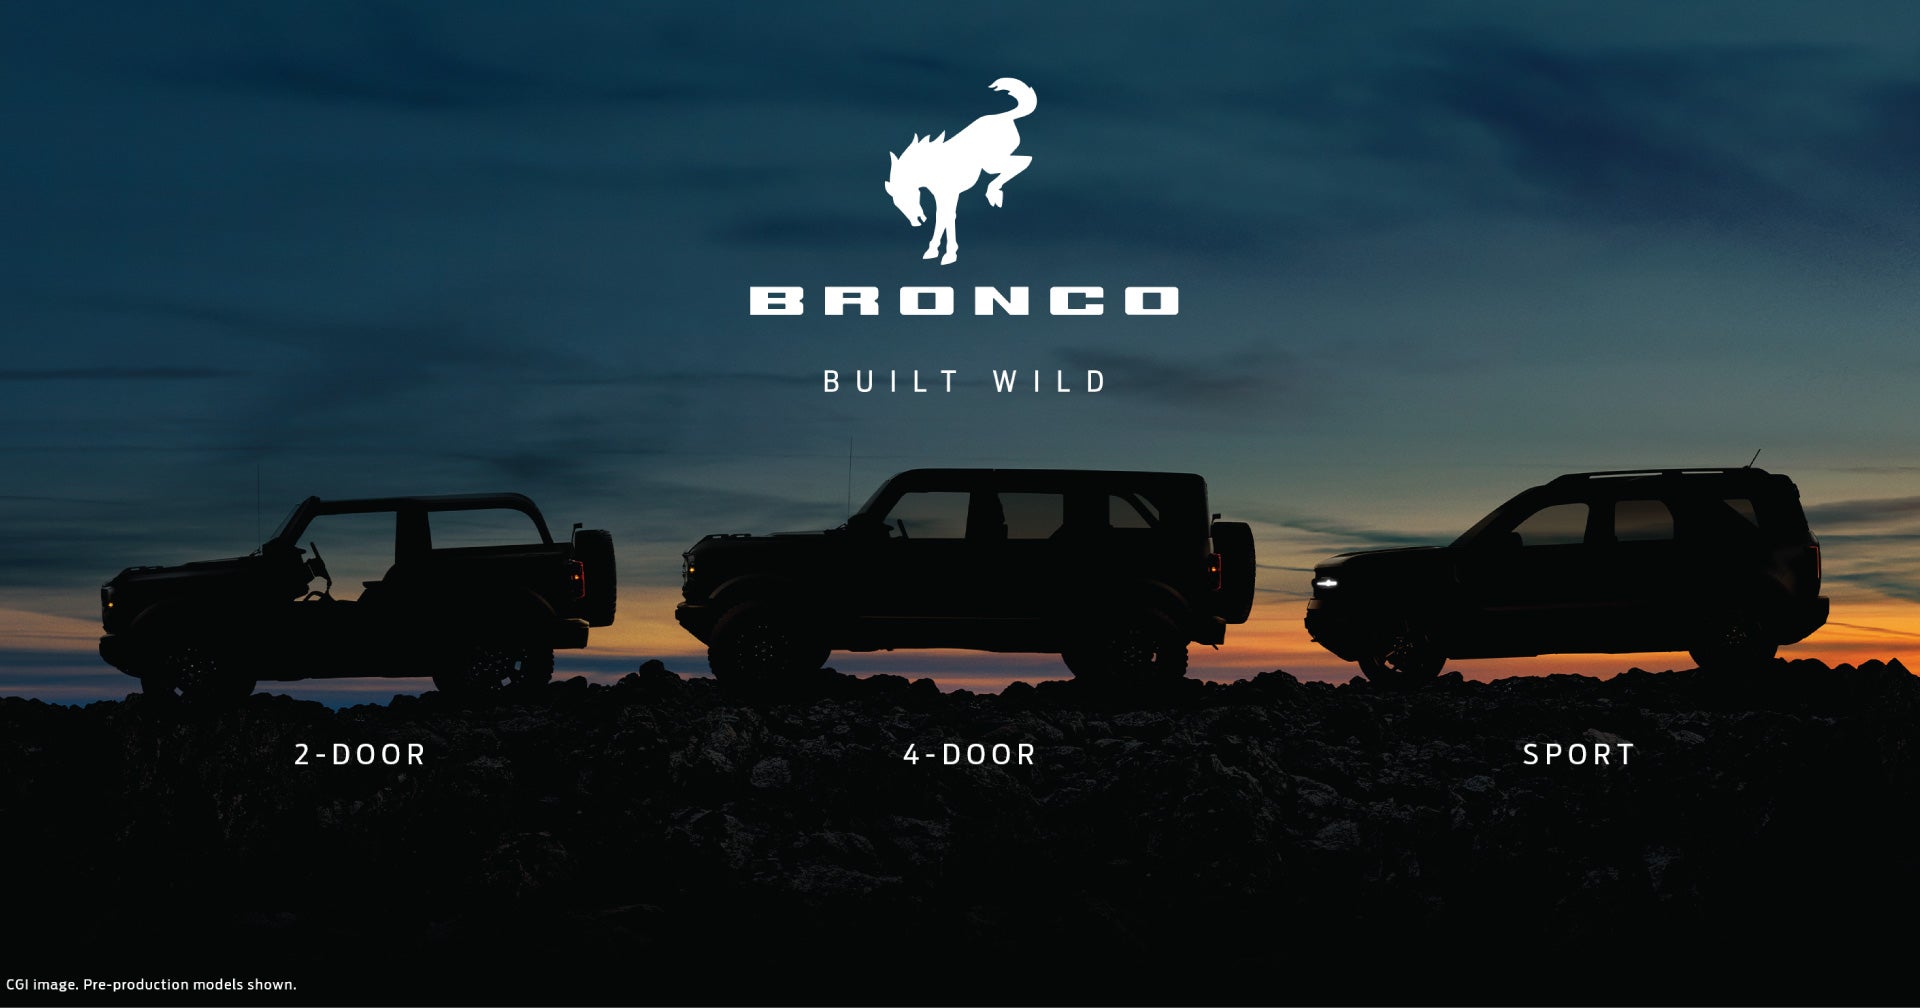 Ford Bronco Family 3 SUV Lineup